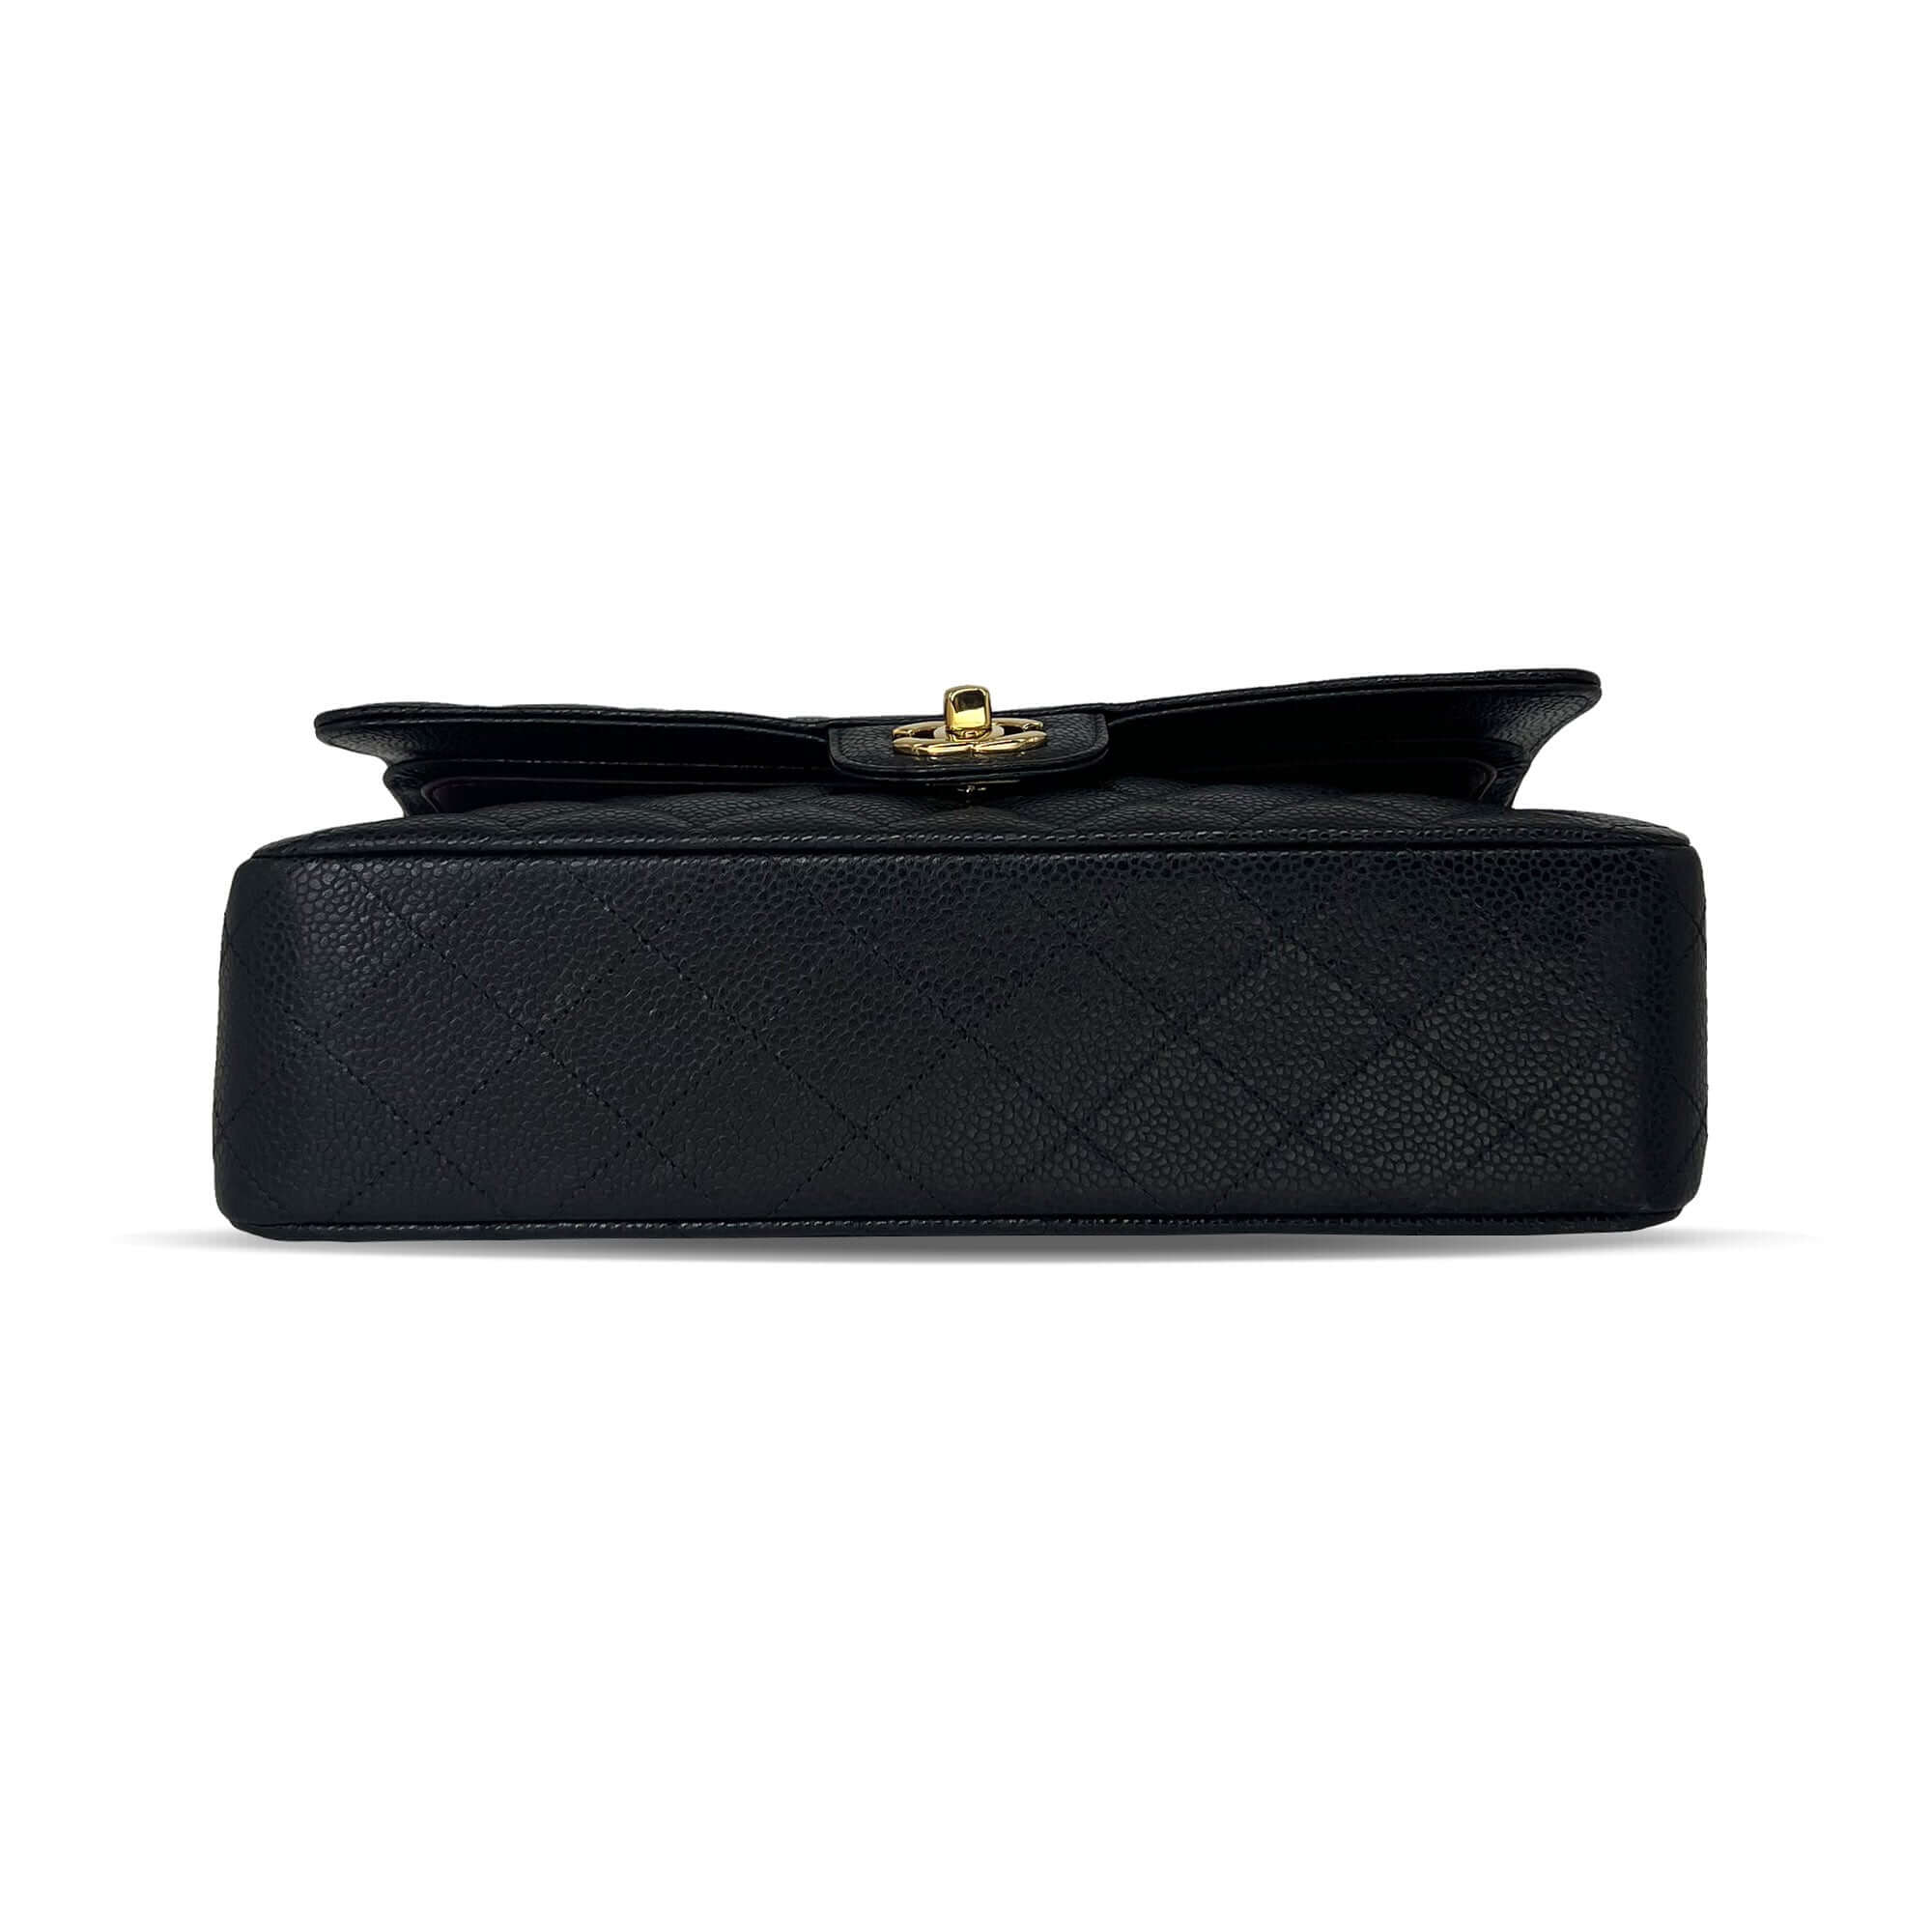 Chanel medium black caviar leather double flap closure bag